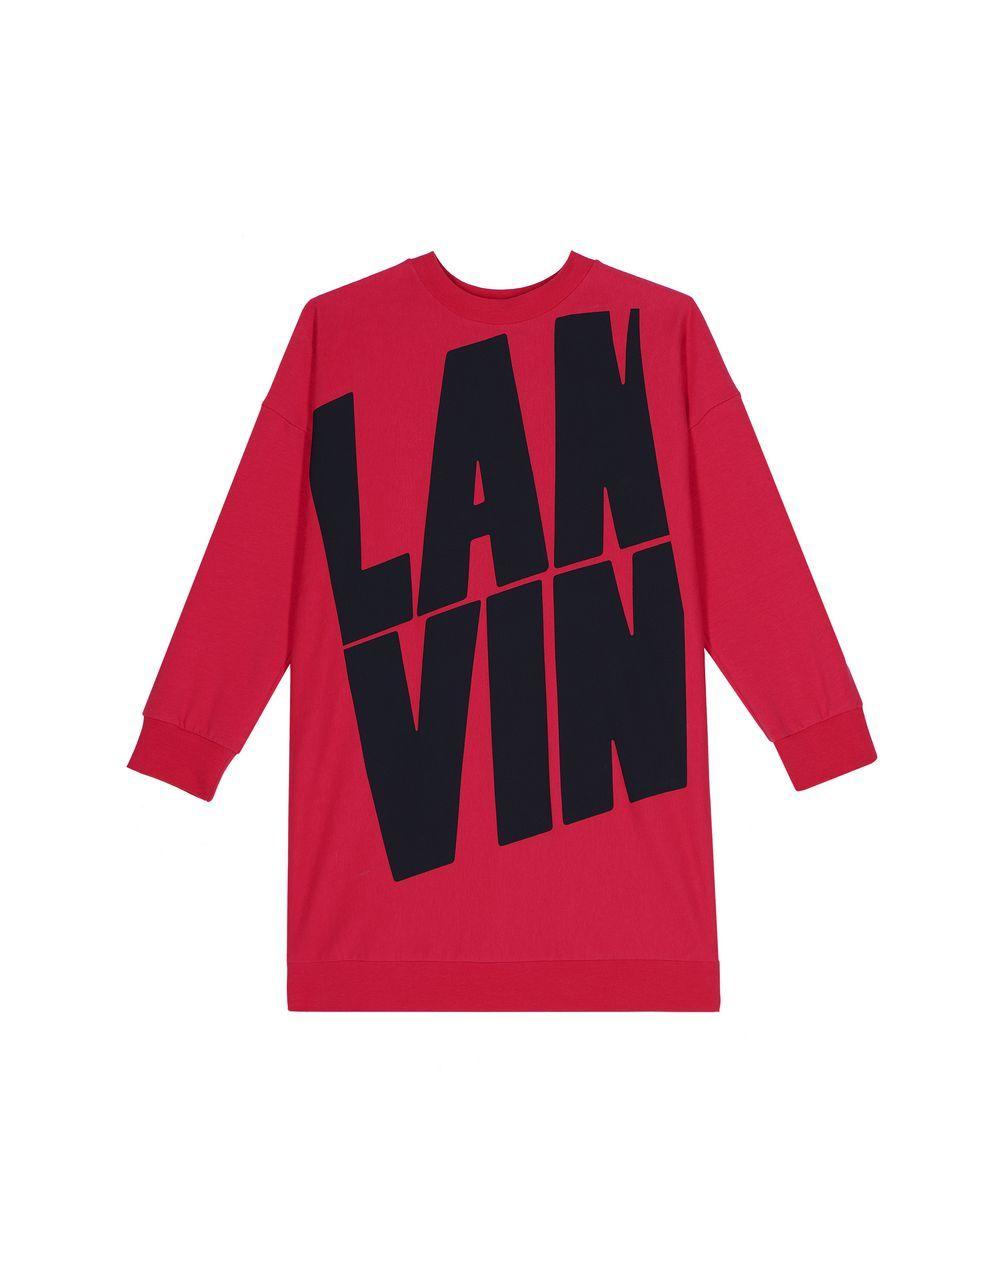 Lanvin Logo - Lanvin FUCHSIA LANVIN LOGO DRESS, Dress Childrenswear